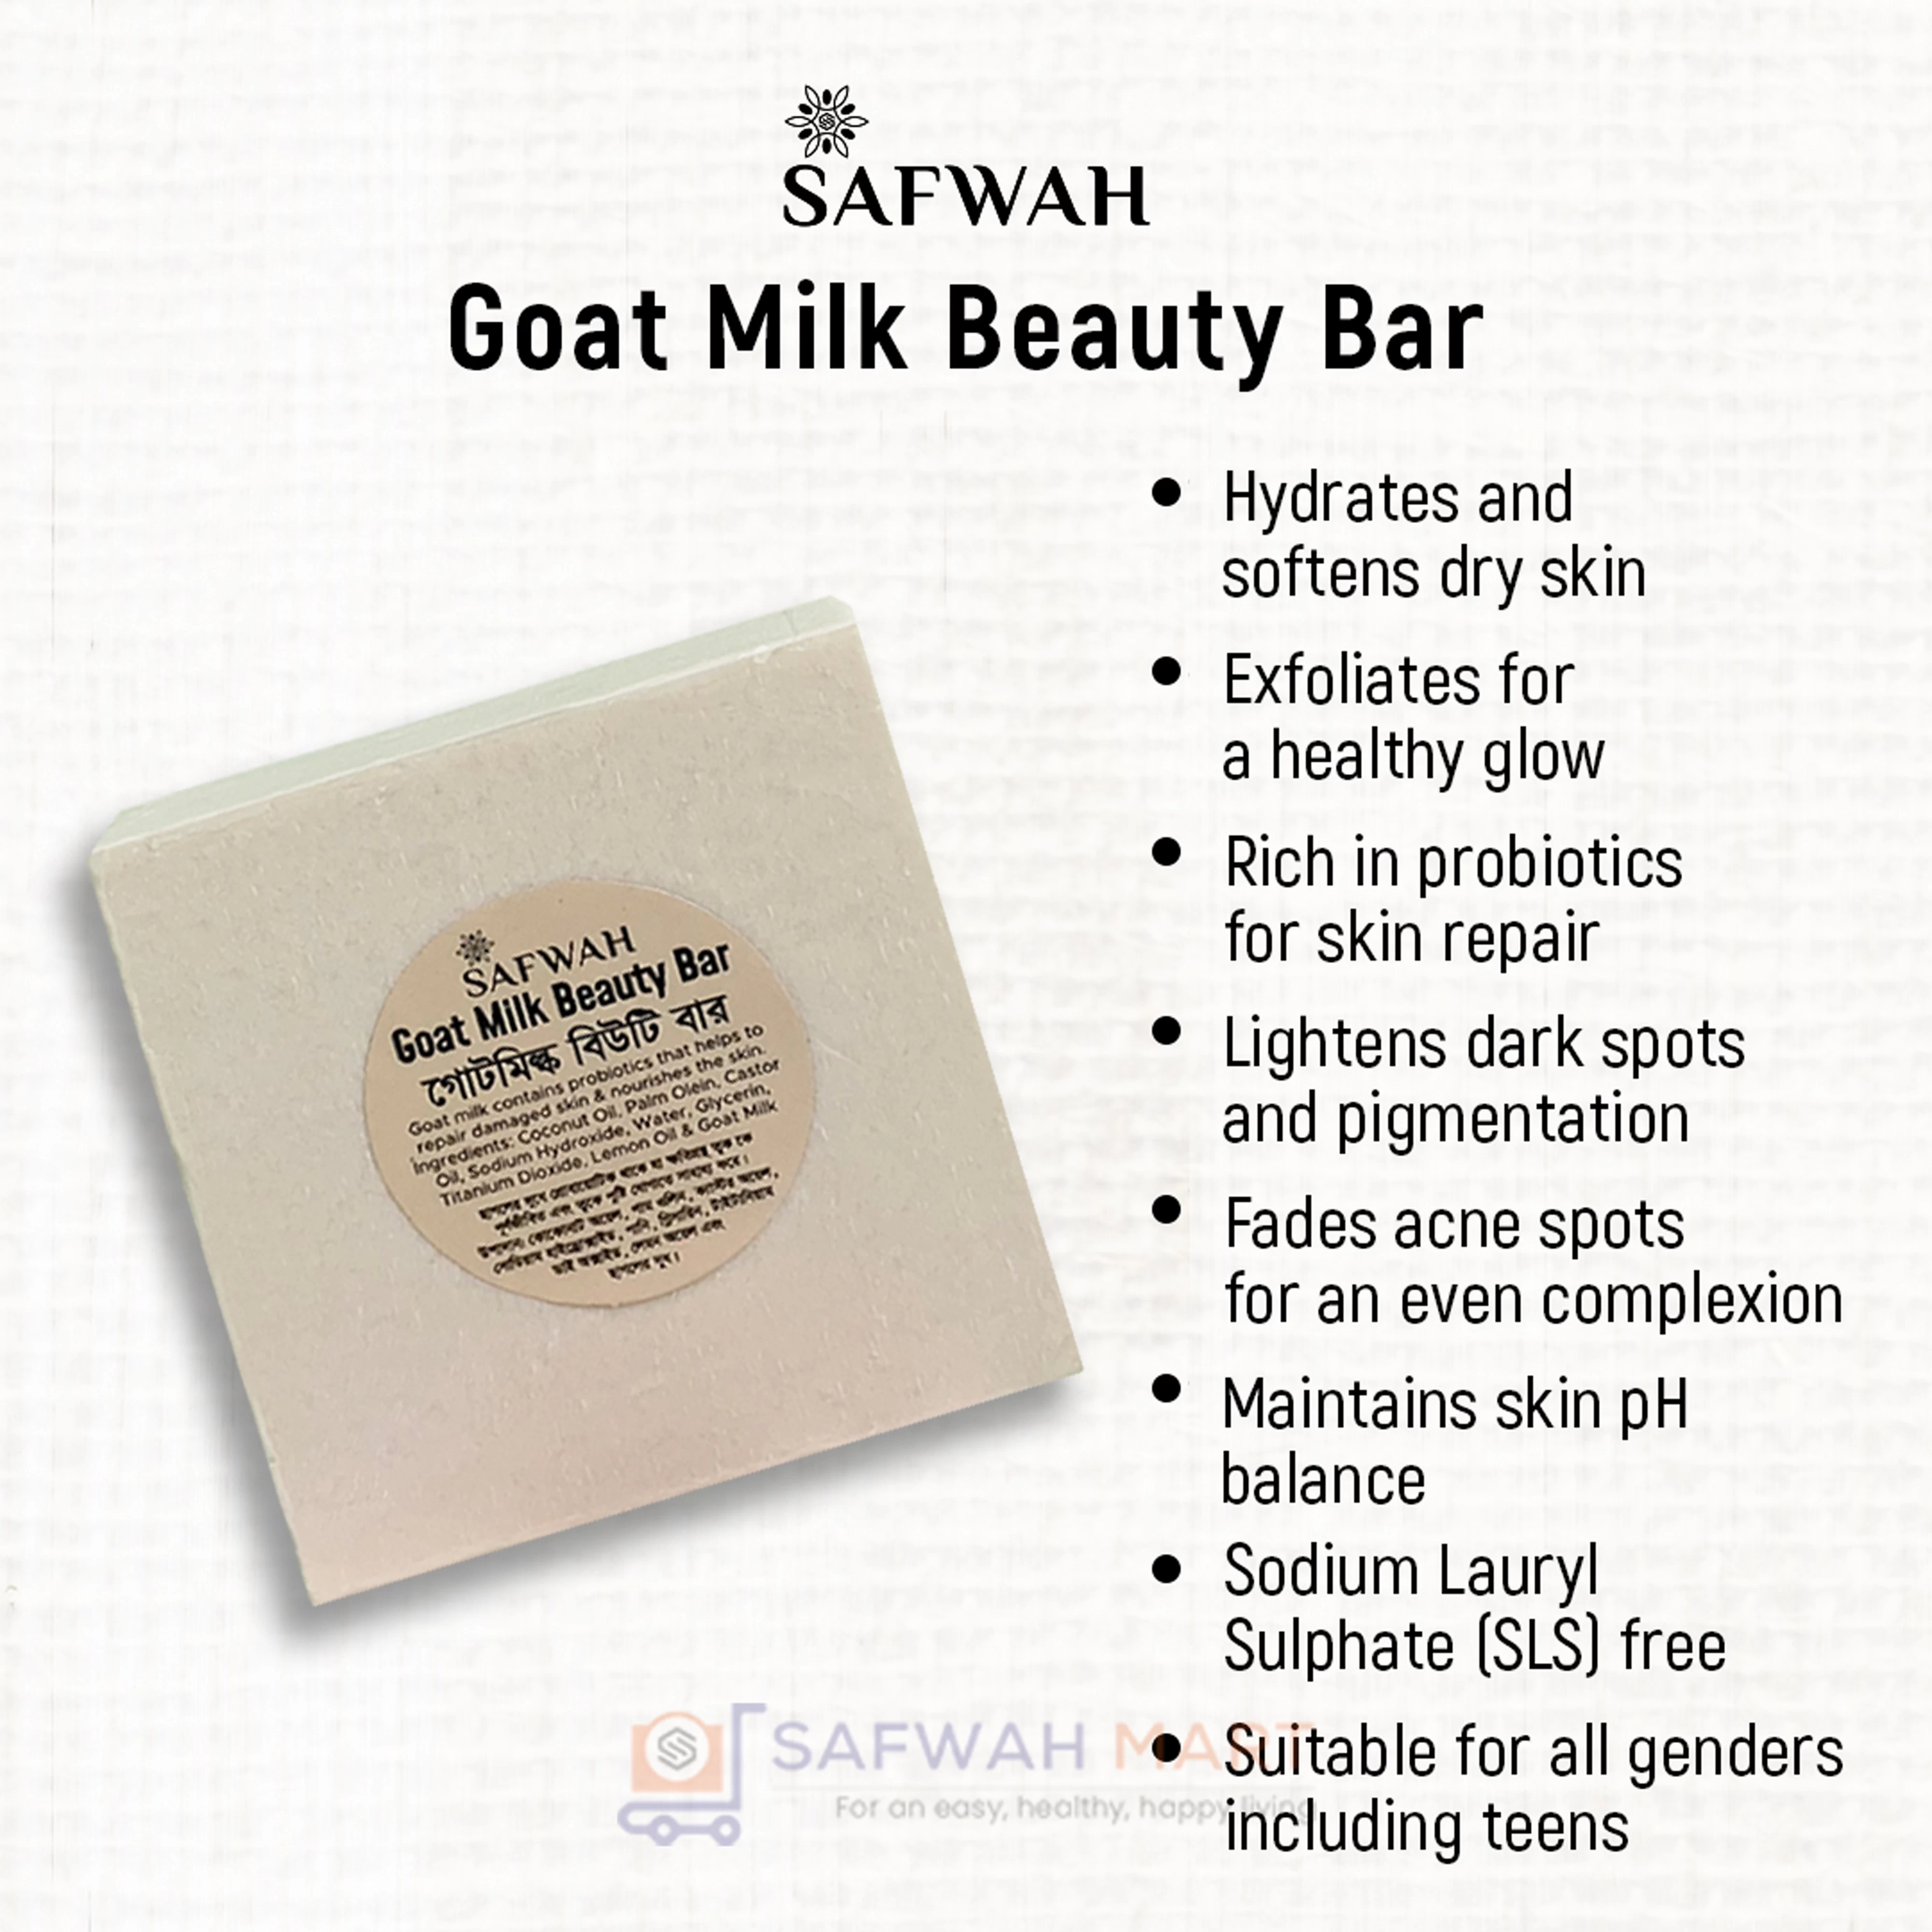 Safwah Goat Milk Beauty Bar